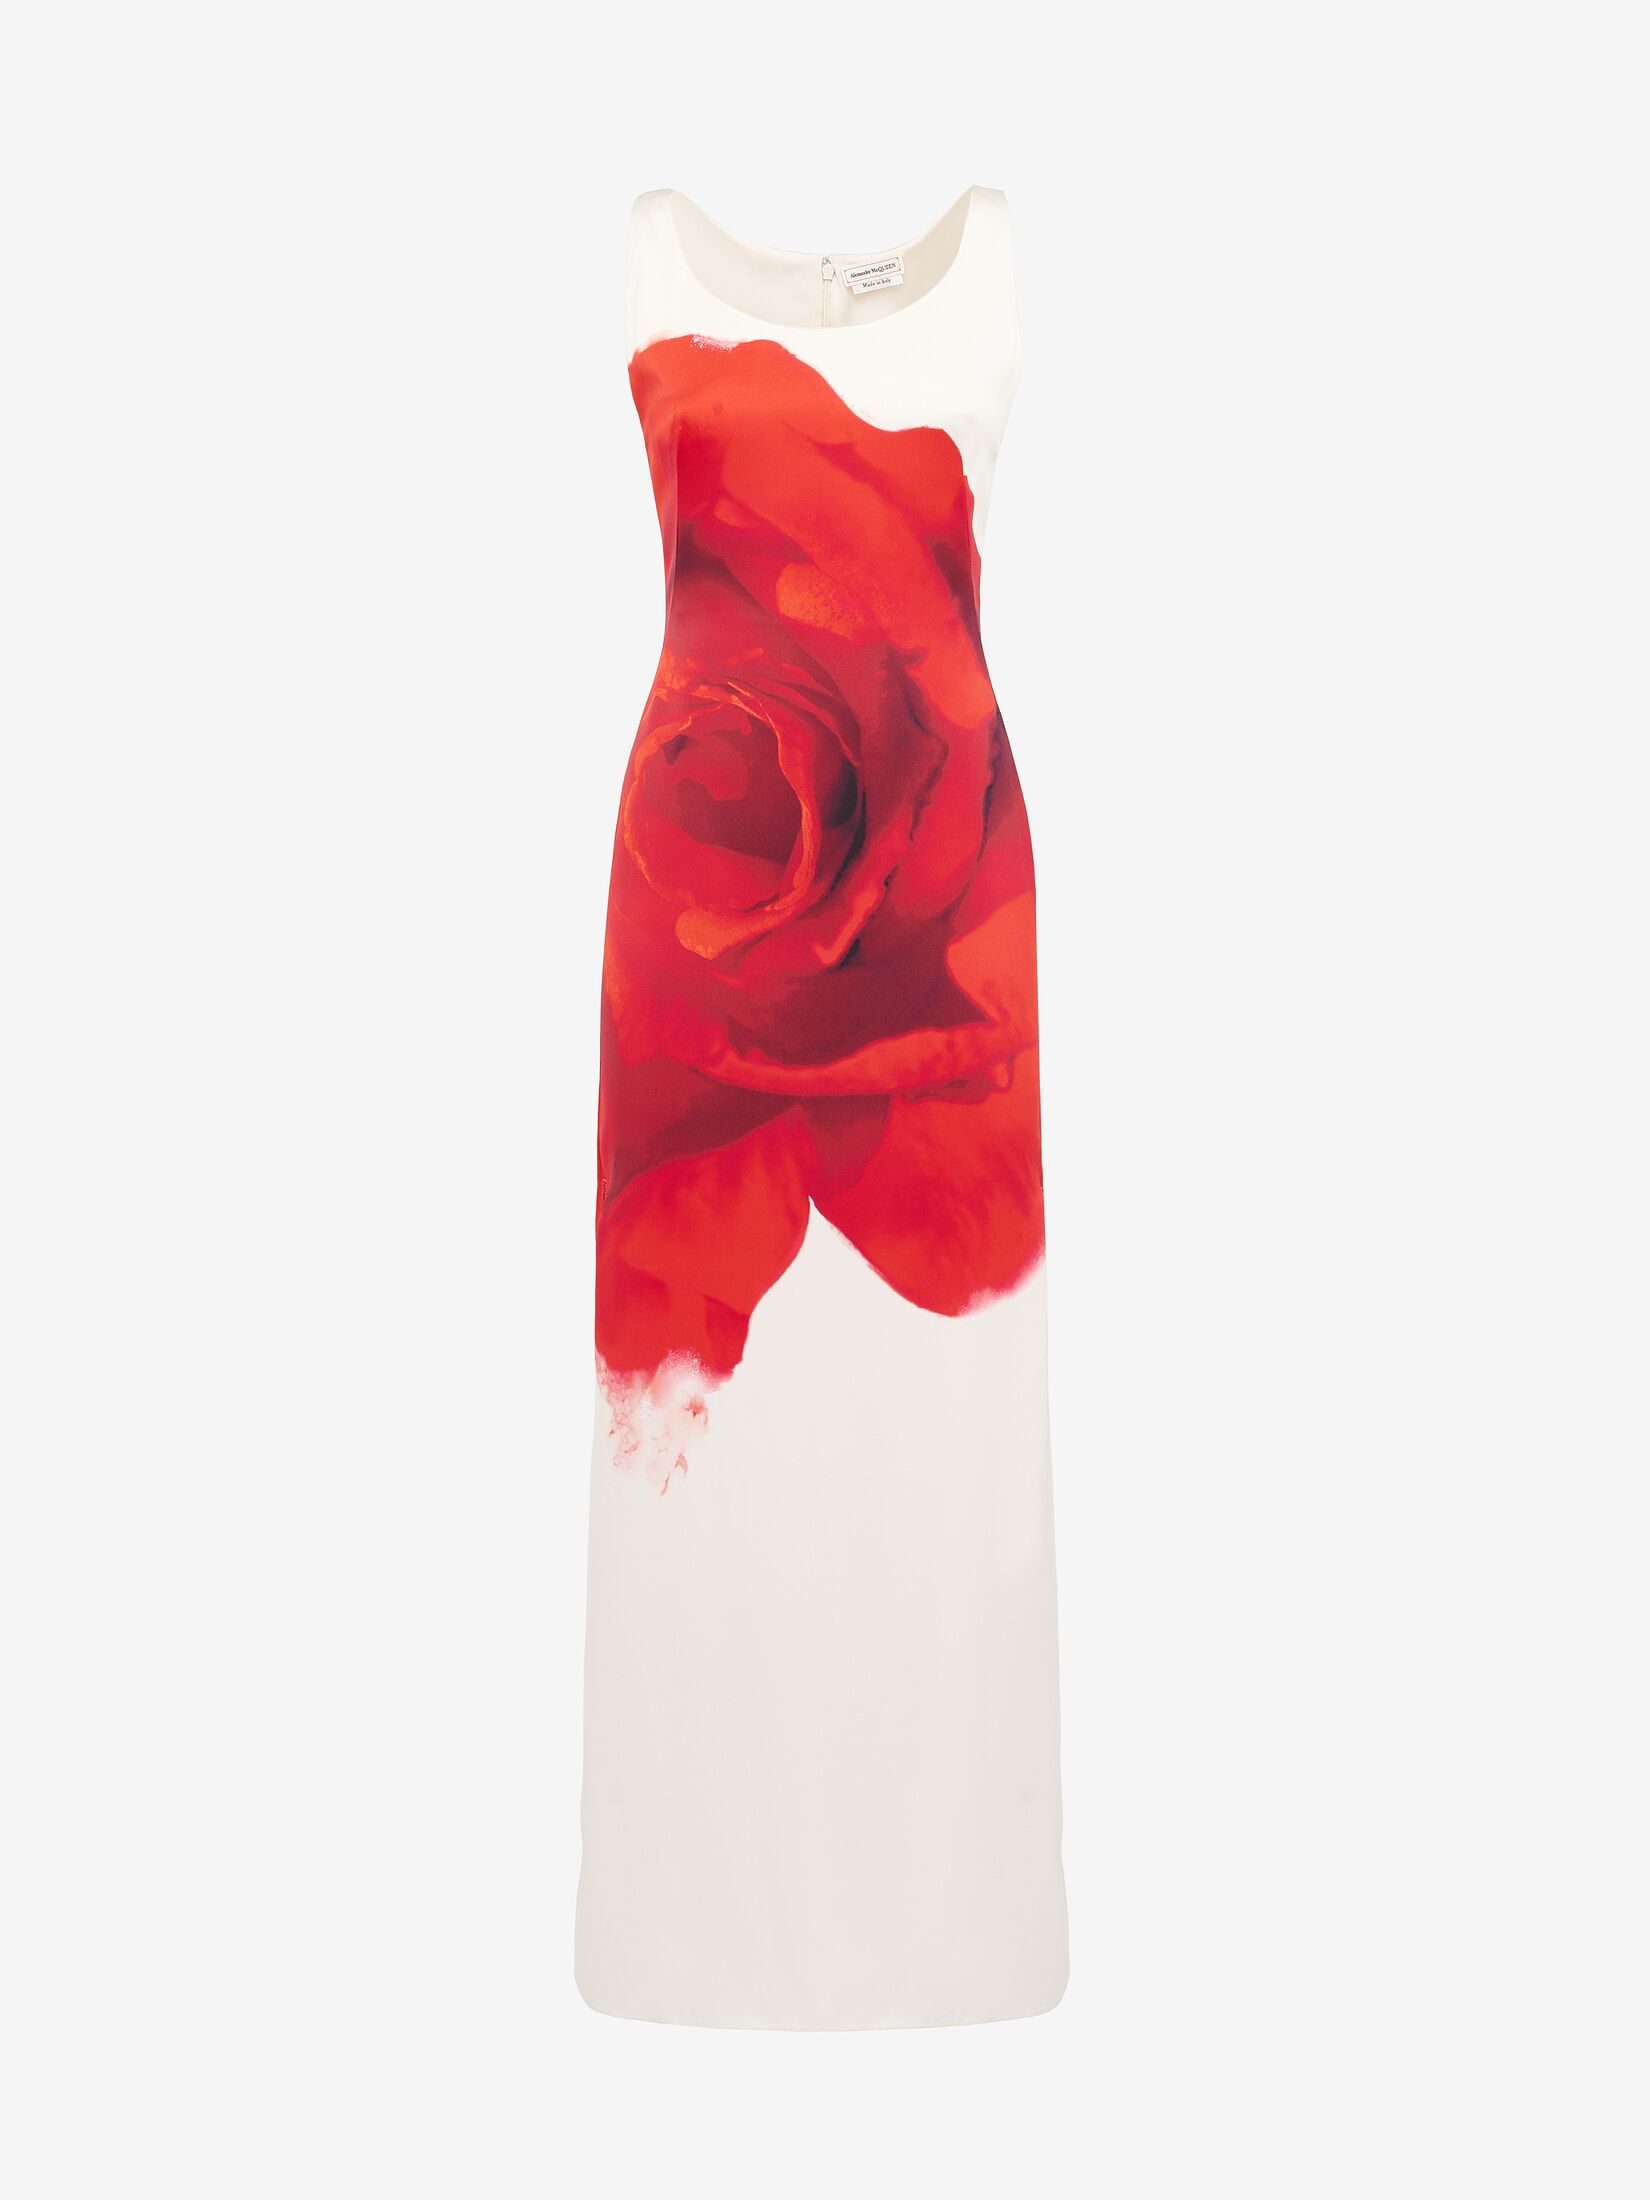 Bleeding Rose Pencil Dress